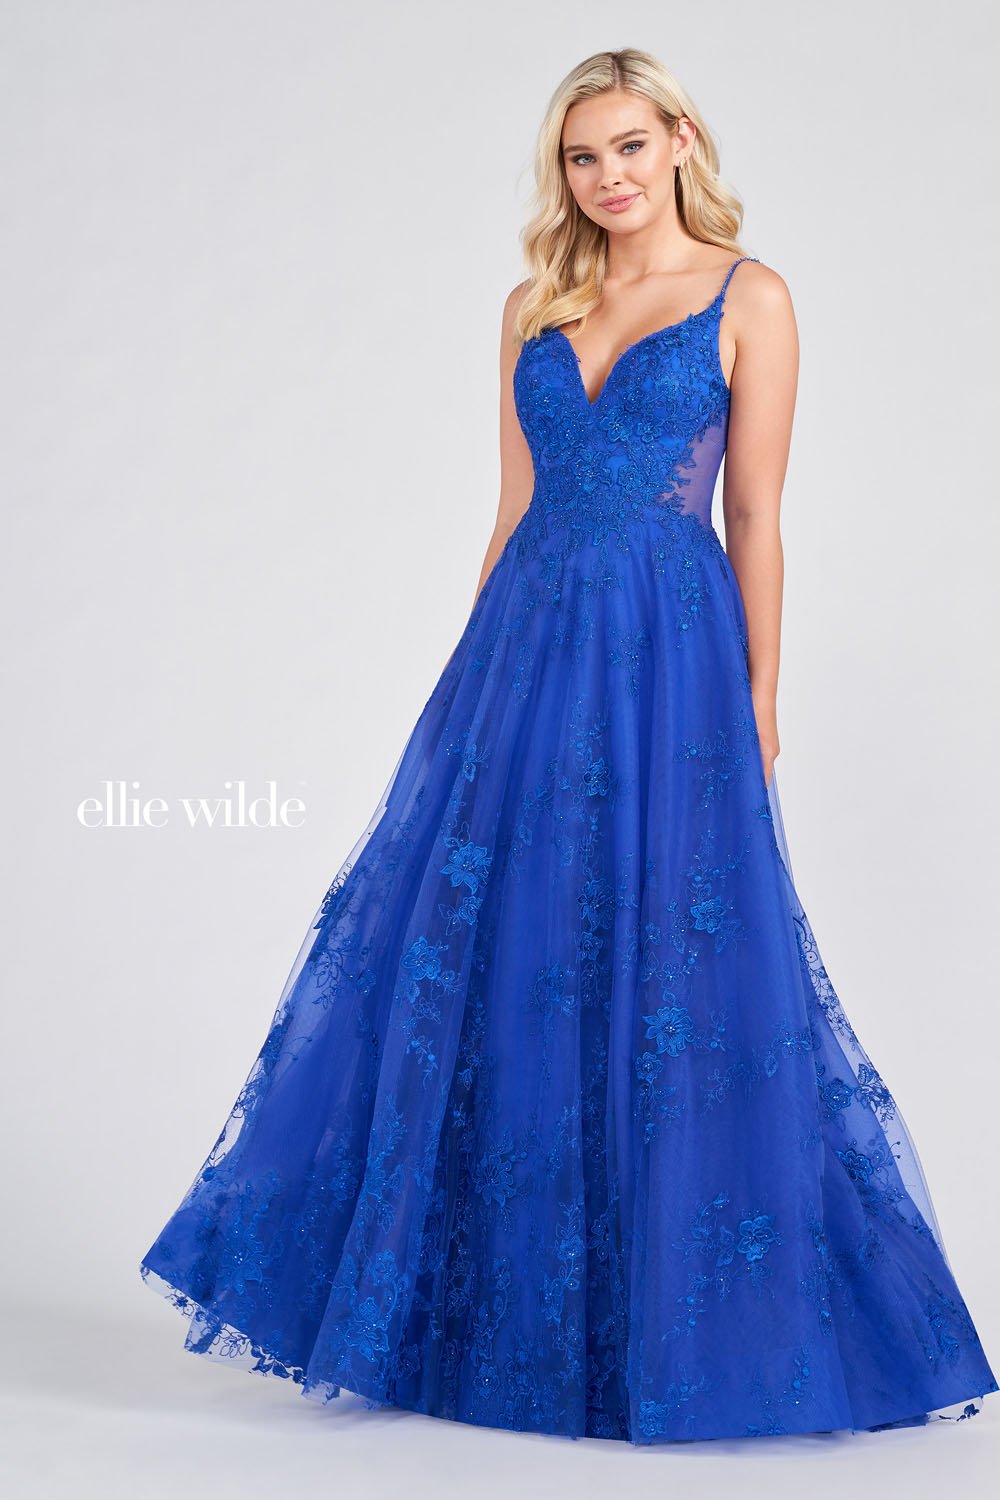 Ellie Wilde Royal Blue EW122053 Prom Dress Image.  Royal Blue formal dress.